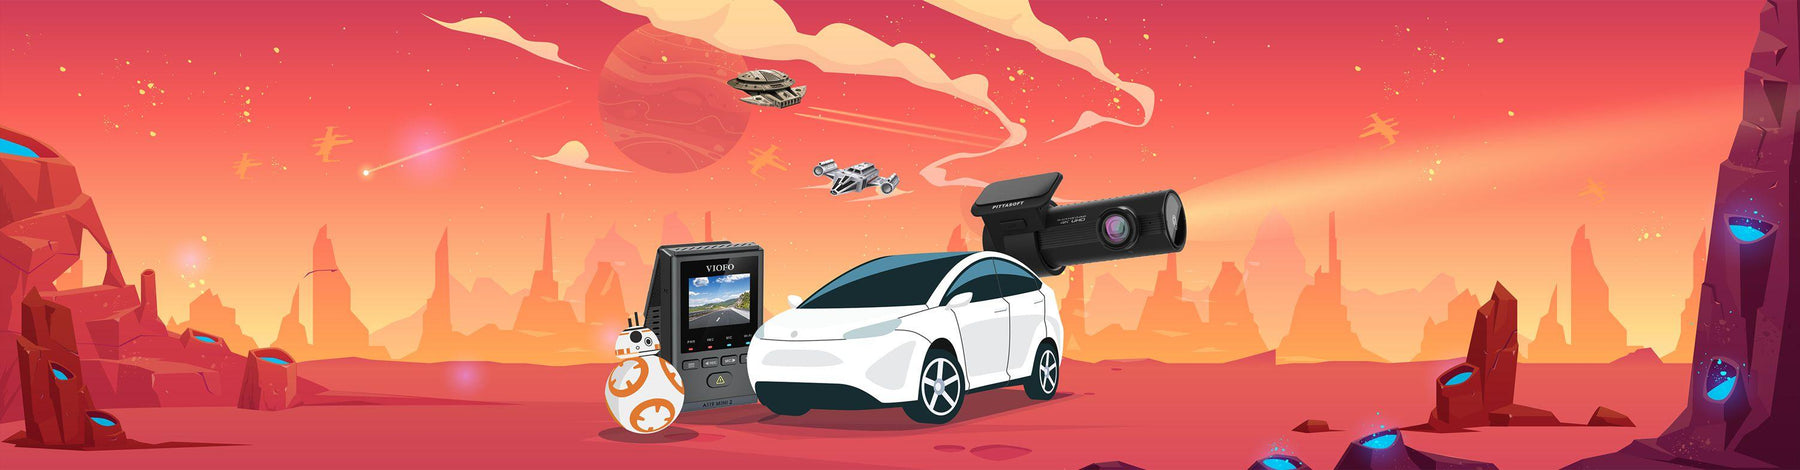 Star Wars: A New Hope for Road Safety - - BlackboxMyCar Canada